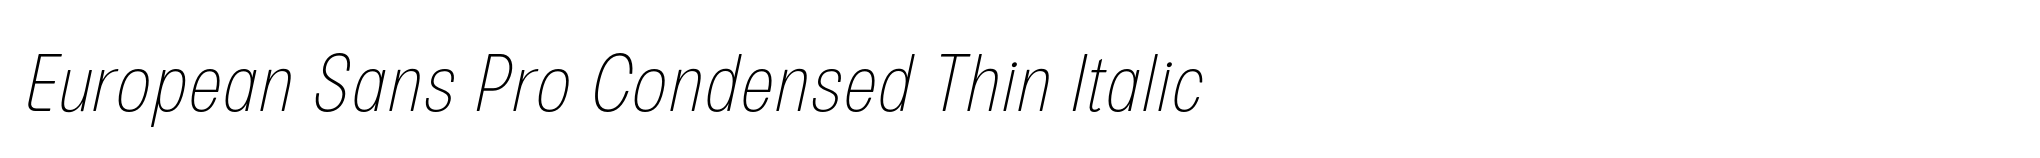 European Sans Pro Condensed Thin Italic image